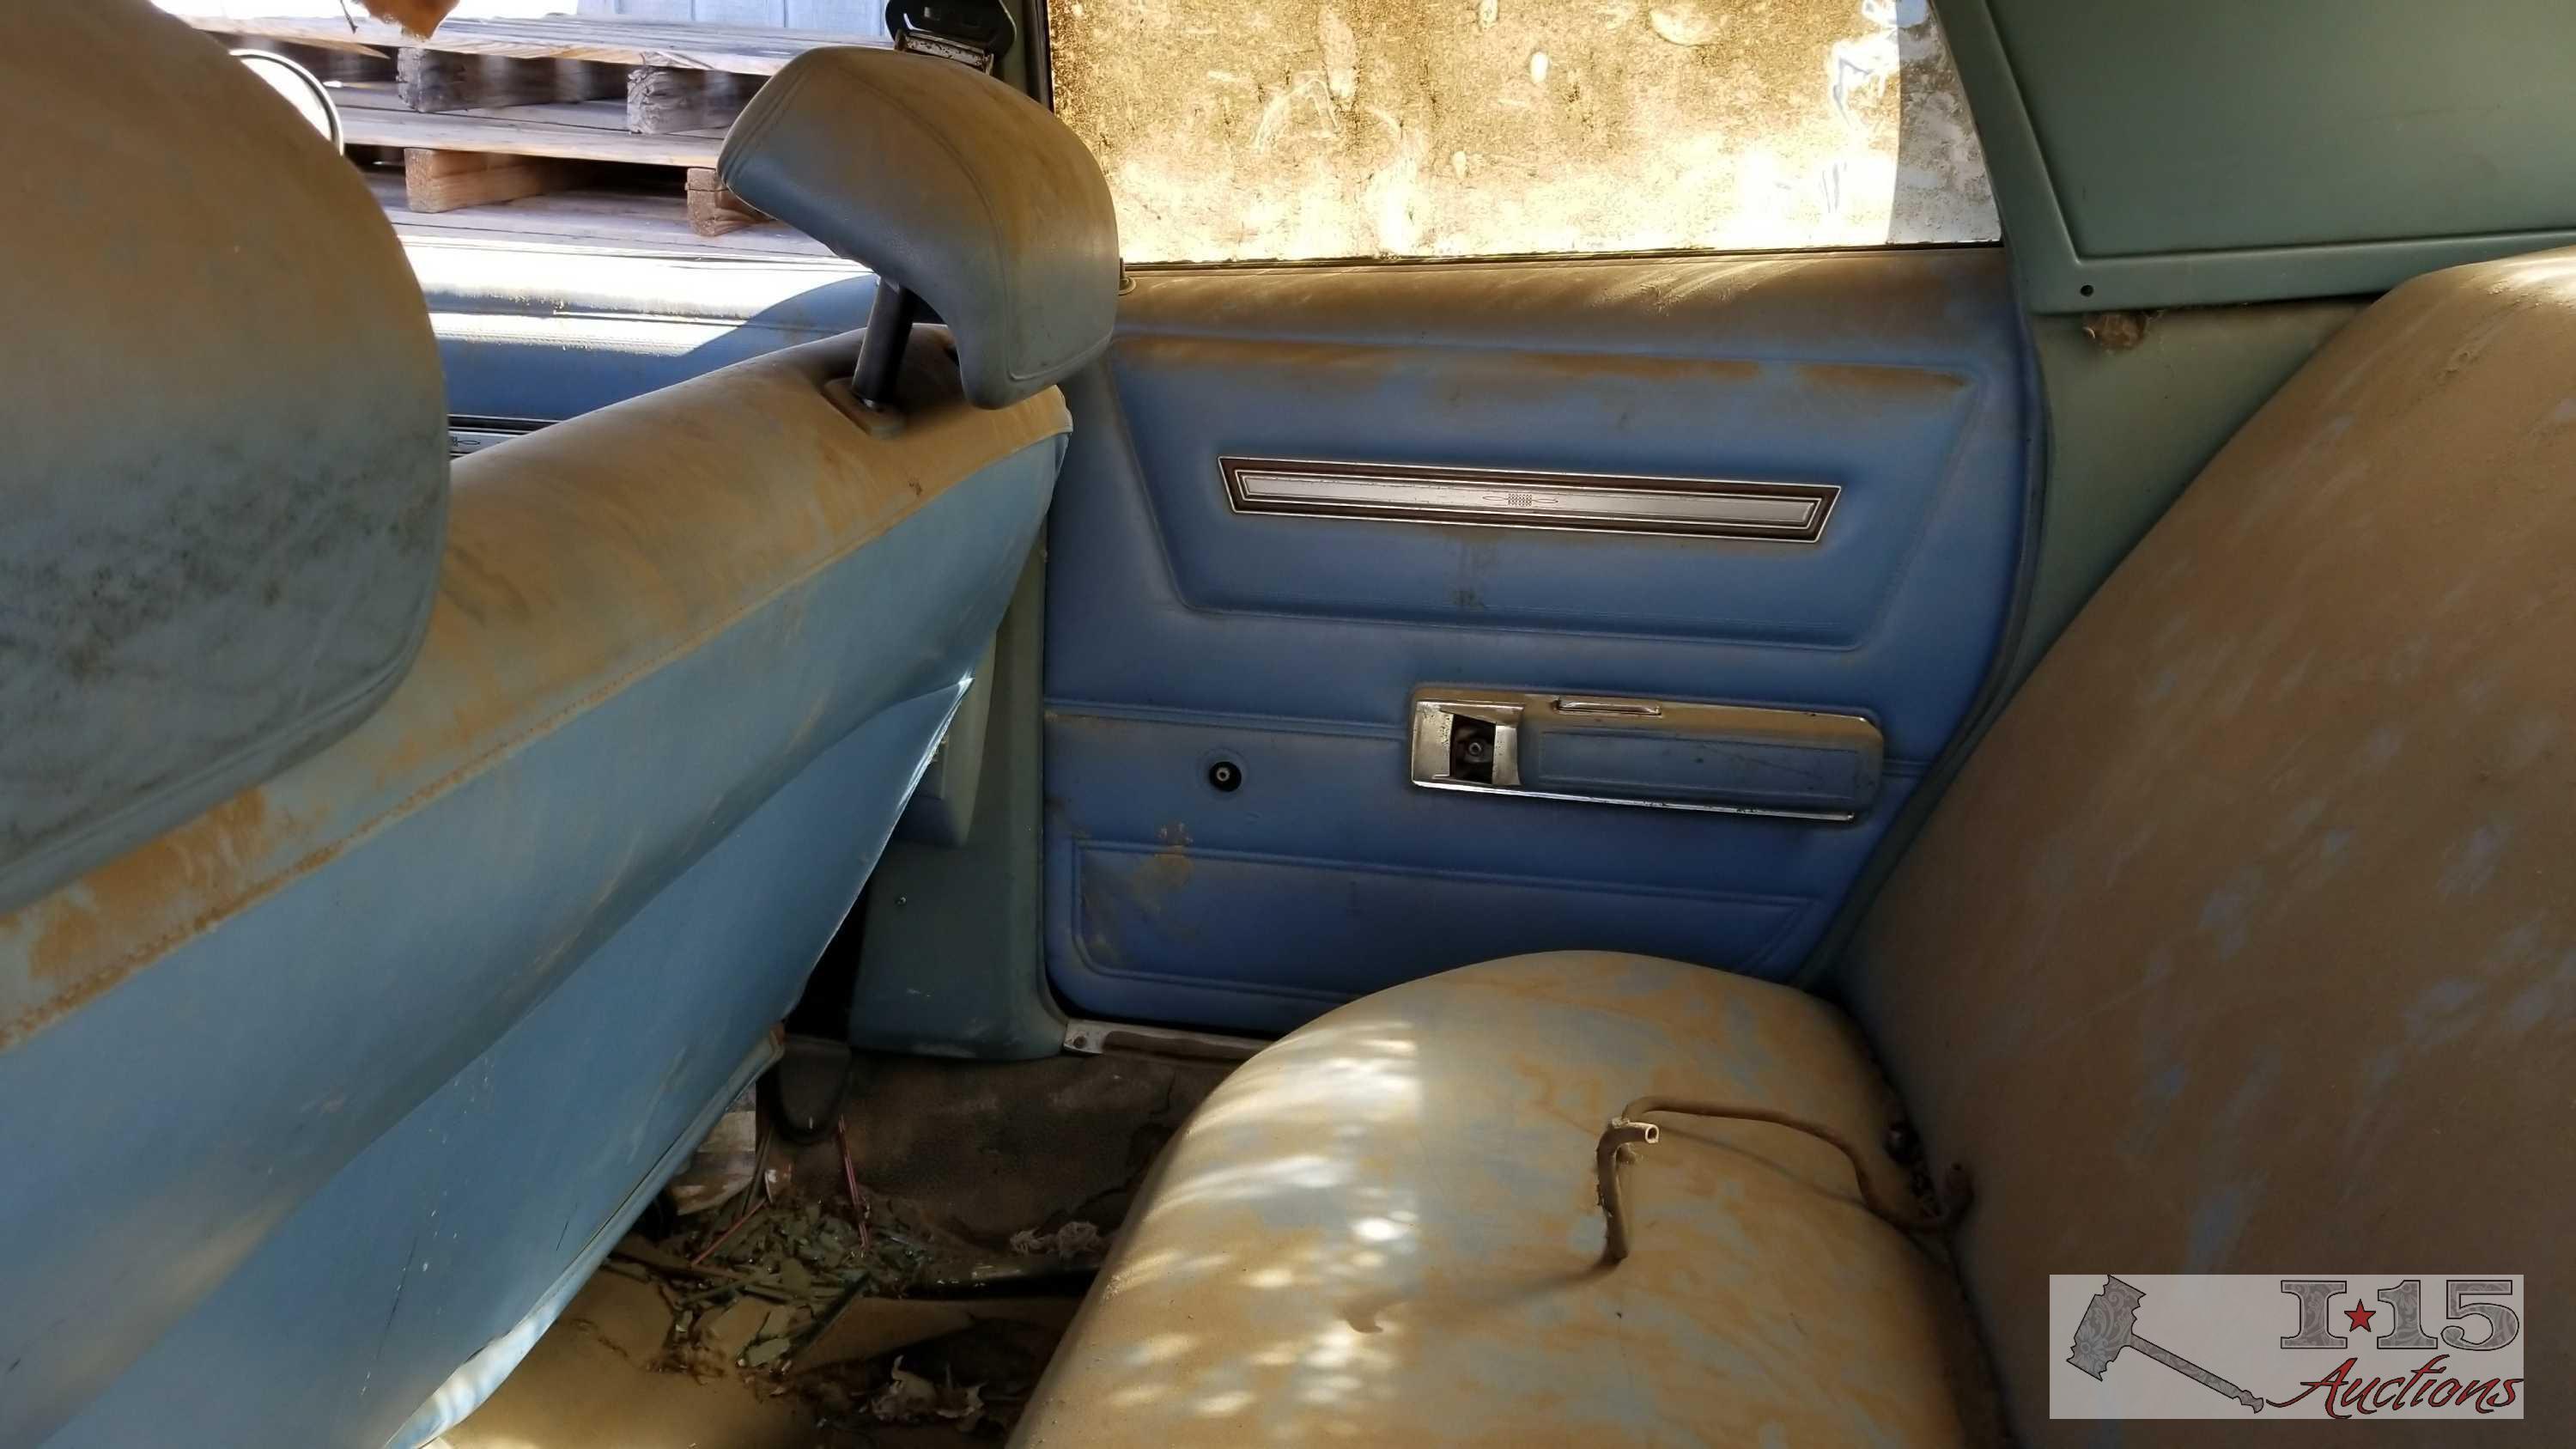 1978 Plymouth Fury 4 Door Sedan